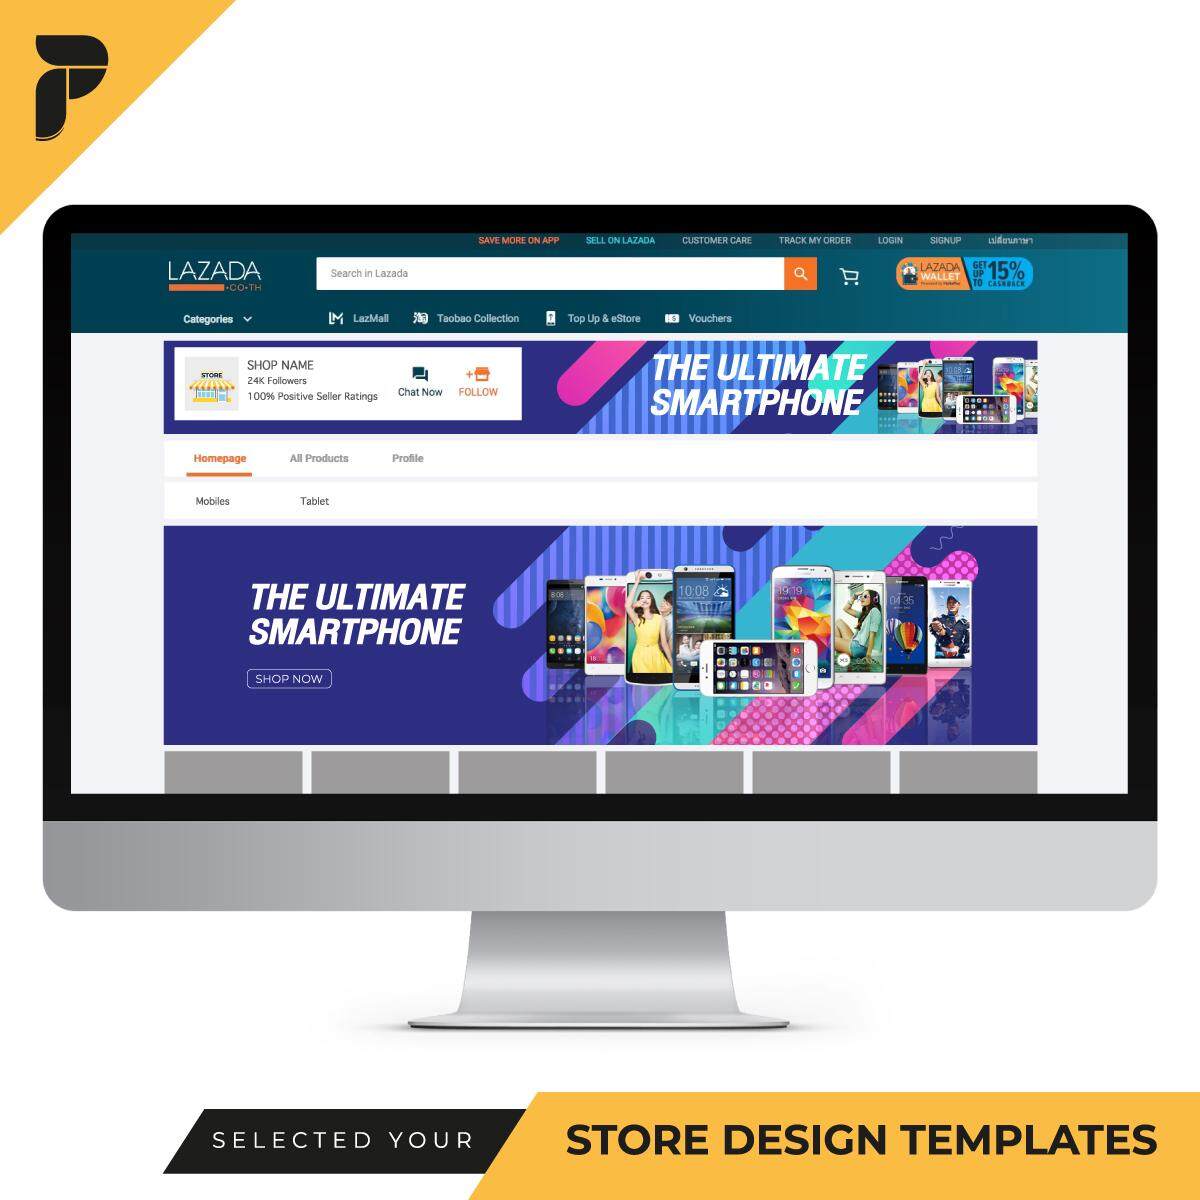 Store Design Templates Banner Ready-to-Work by PathGraphic Studio - Mobiles & Tablets แบนเนอร์ตกแต่งร้าน แบนเนอร์สำเร็จรูป สำหรับตกแต่งหน้าร้านค้าออนไลน์